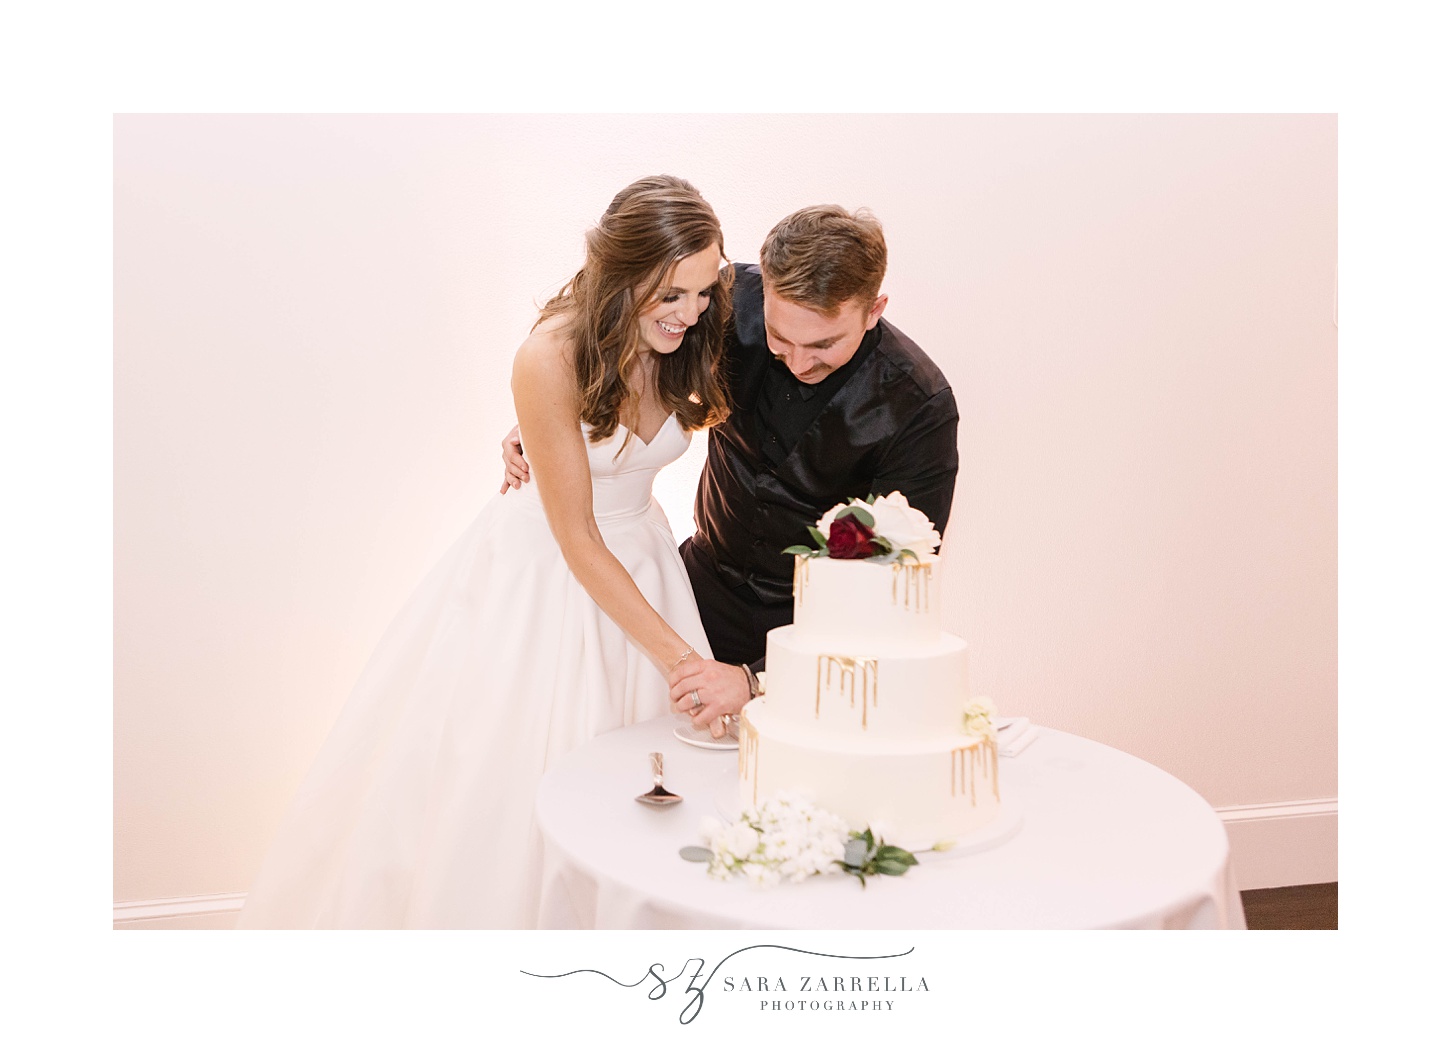 newlyweds cut wedding cake during wedding reception 